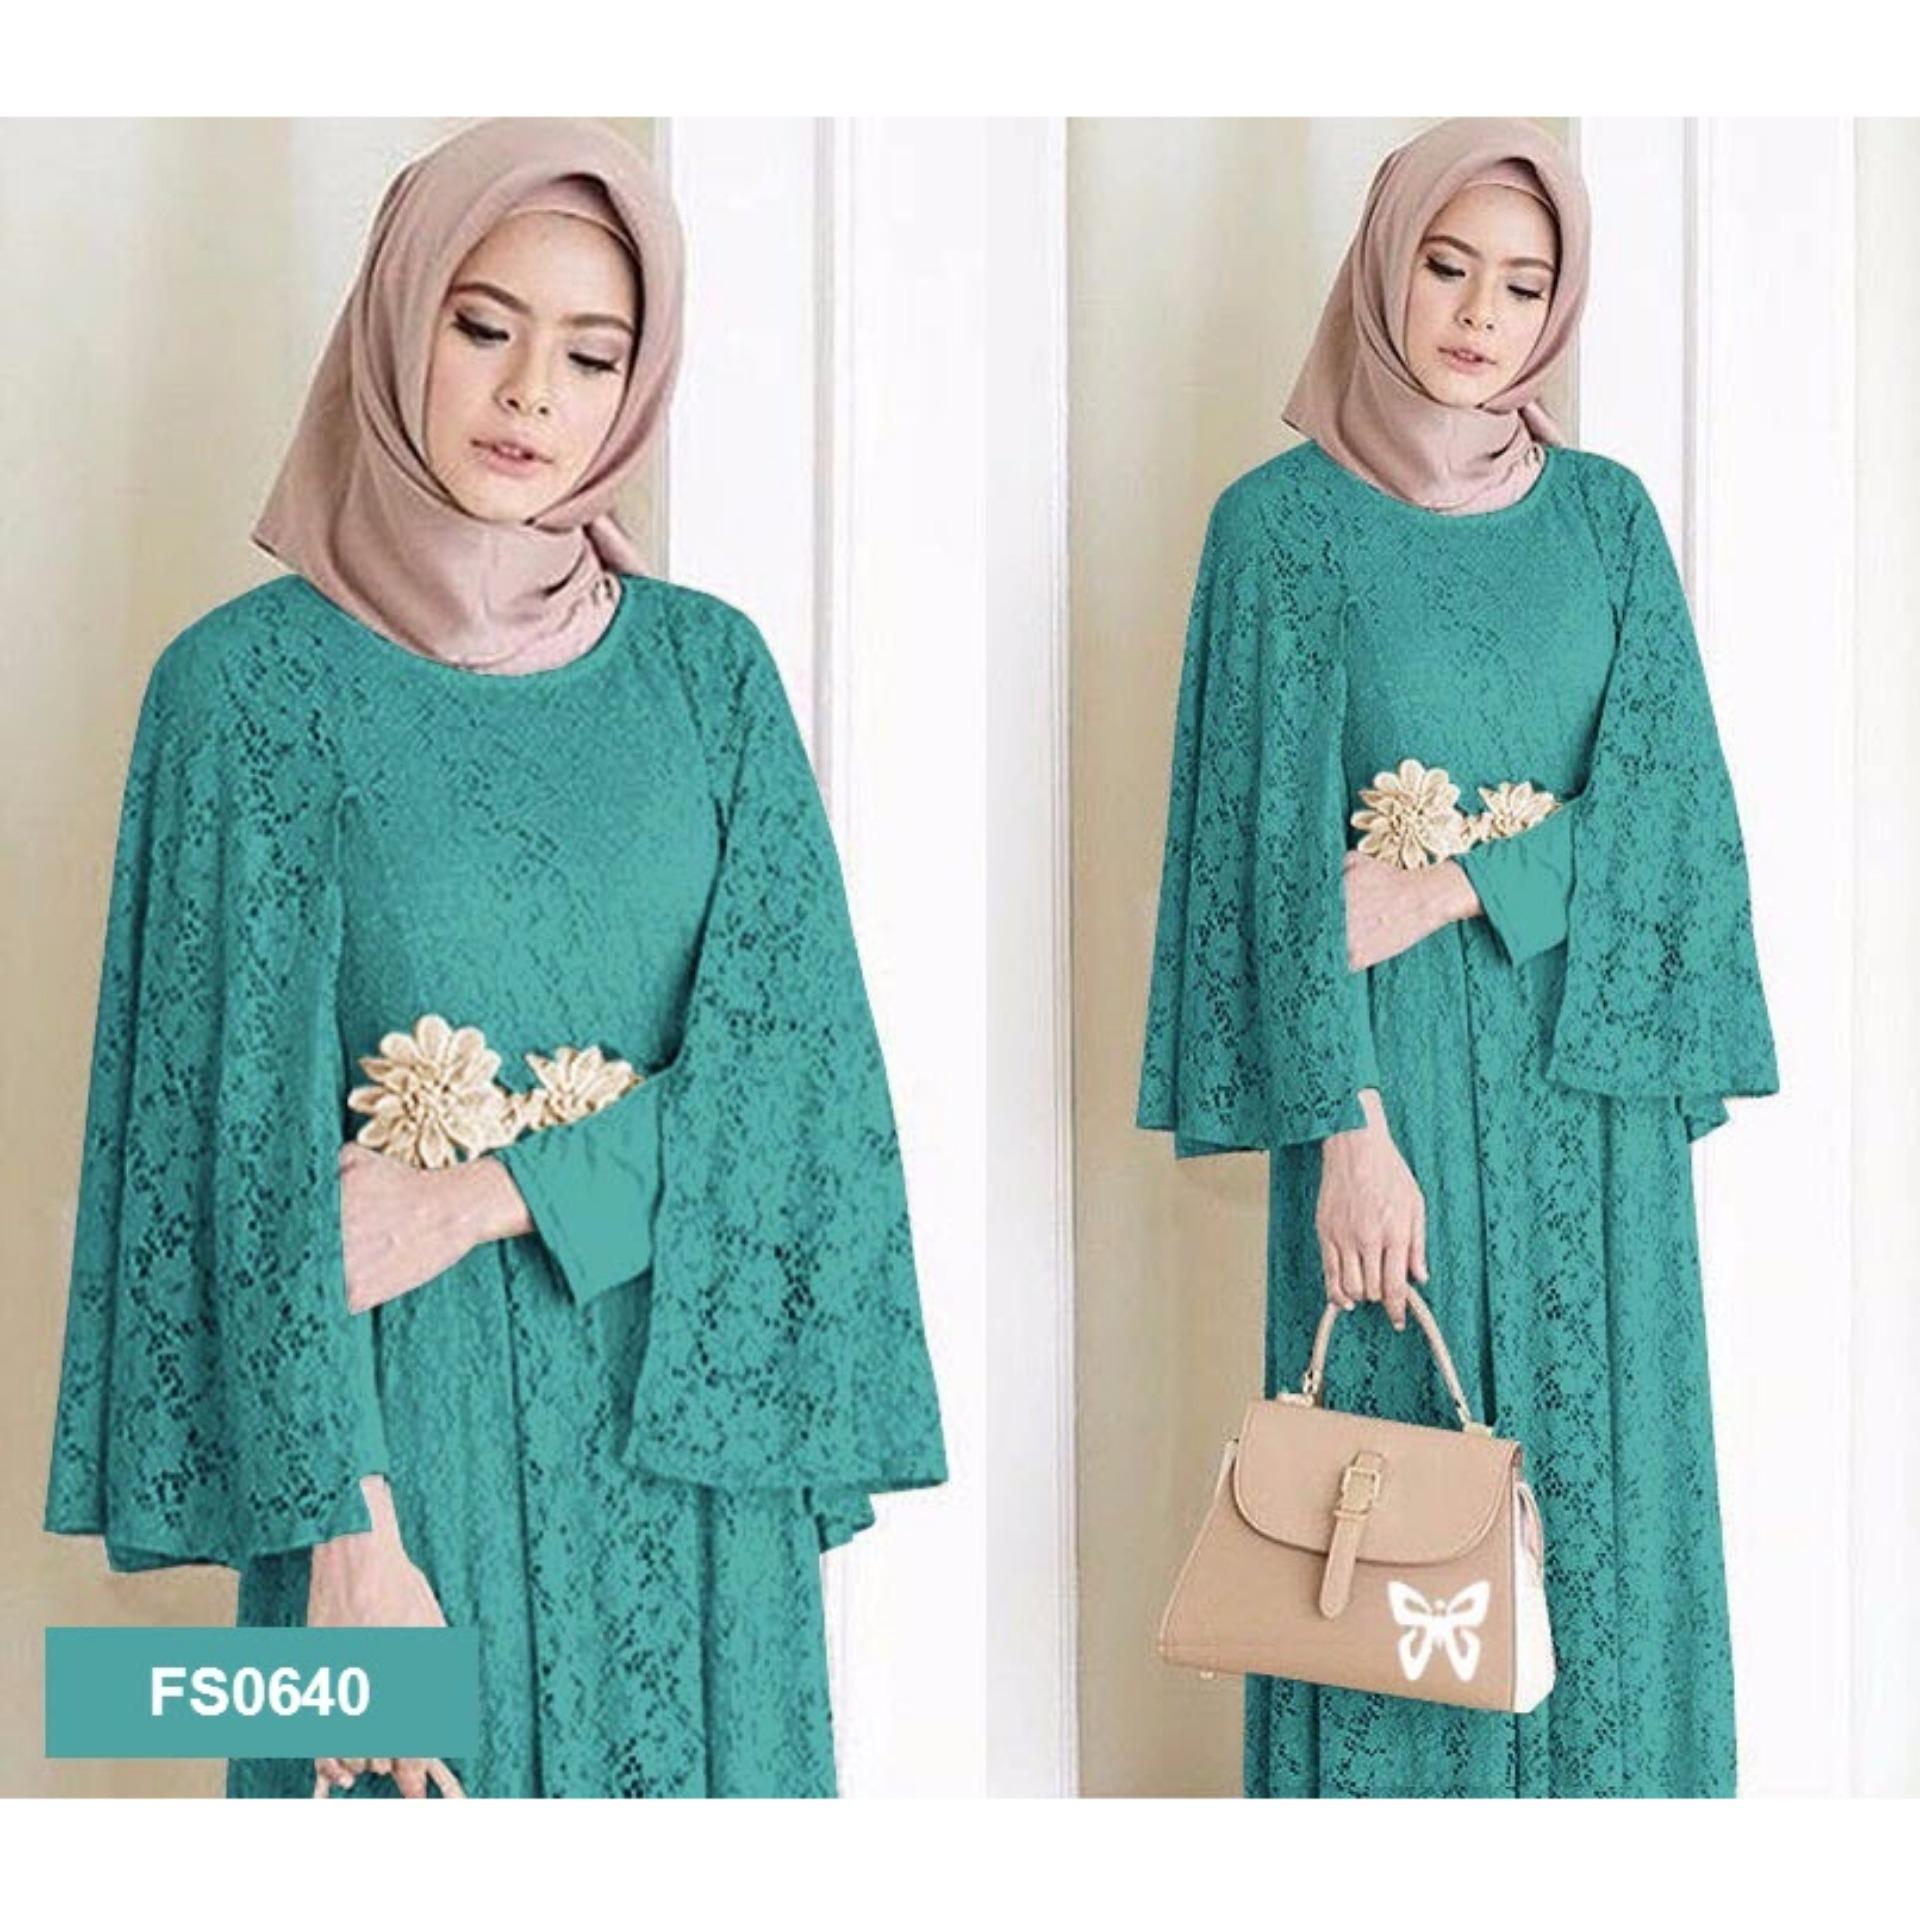 Flavia Store Maxi Dress Lengan Panjang FS0640 - TOSCA / Gamis Syari / Gaun Pesta Muslimah / Baju Muslim Wanita Syar'i / Srregina